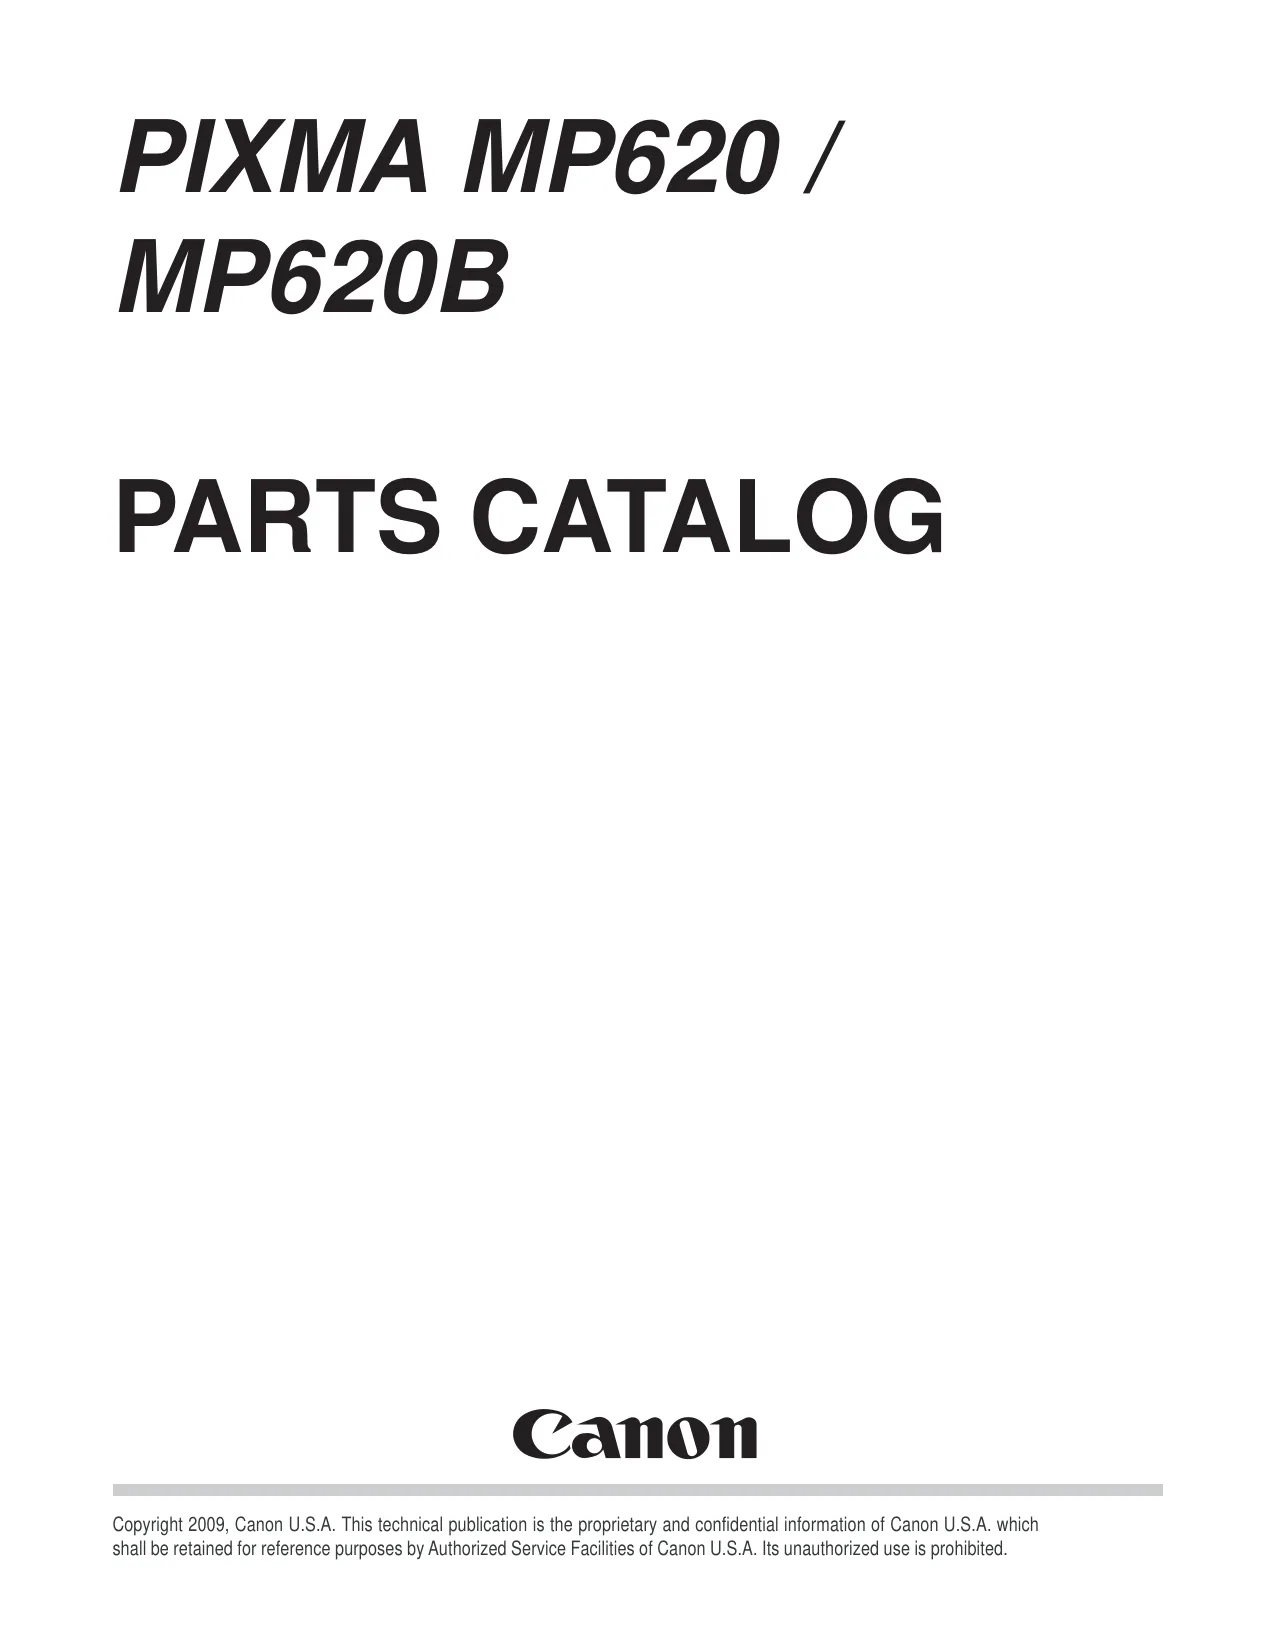 Canon Pixma MP620 + MP620B all-in-one inkjet photo printer manual